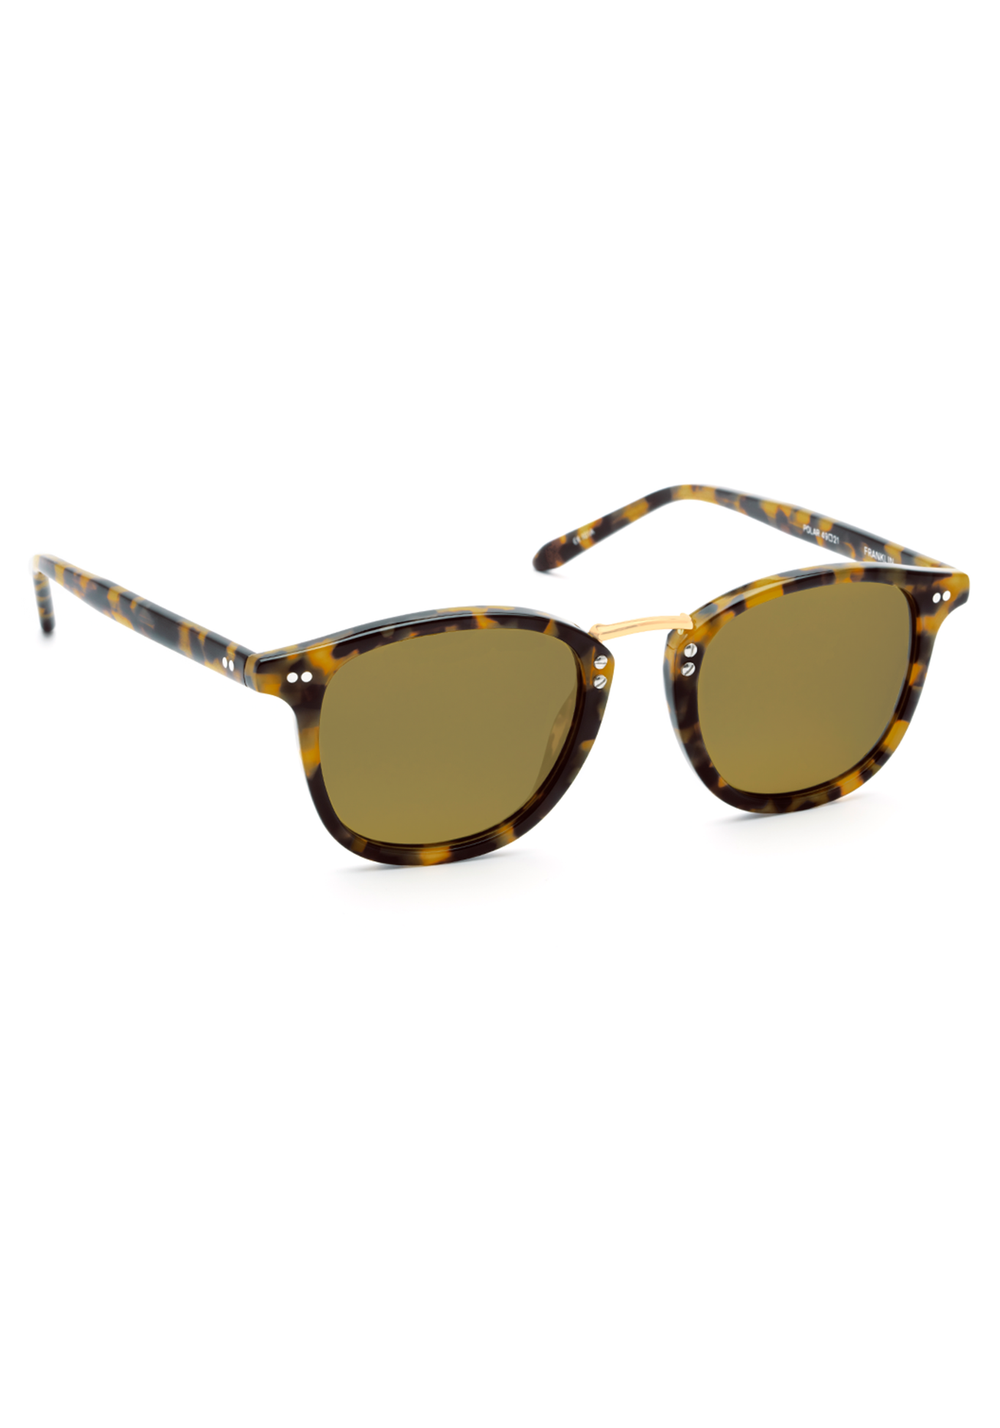 FRANKLIN | Blonde Tortoise Polarized 24K | Handcrafted, luxury acetate wayfarer KREWE Sunglasses with a 24K gold bridge.